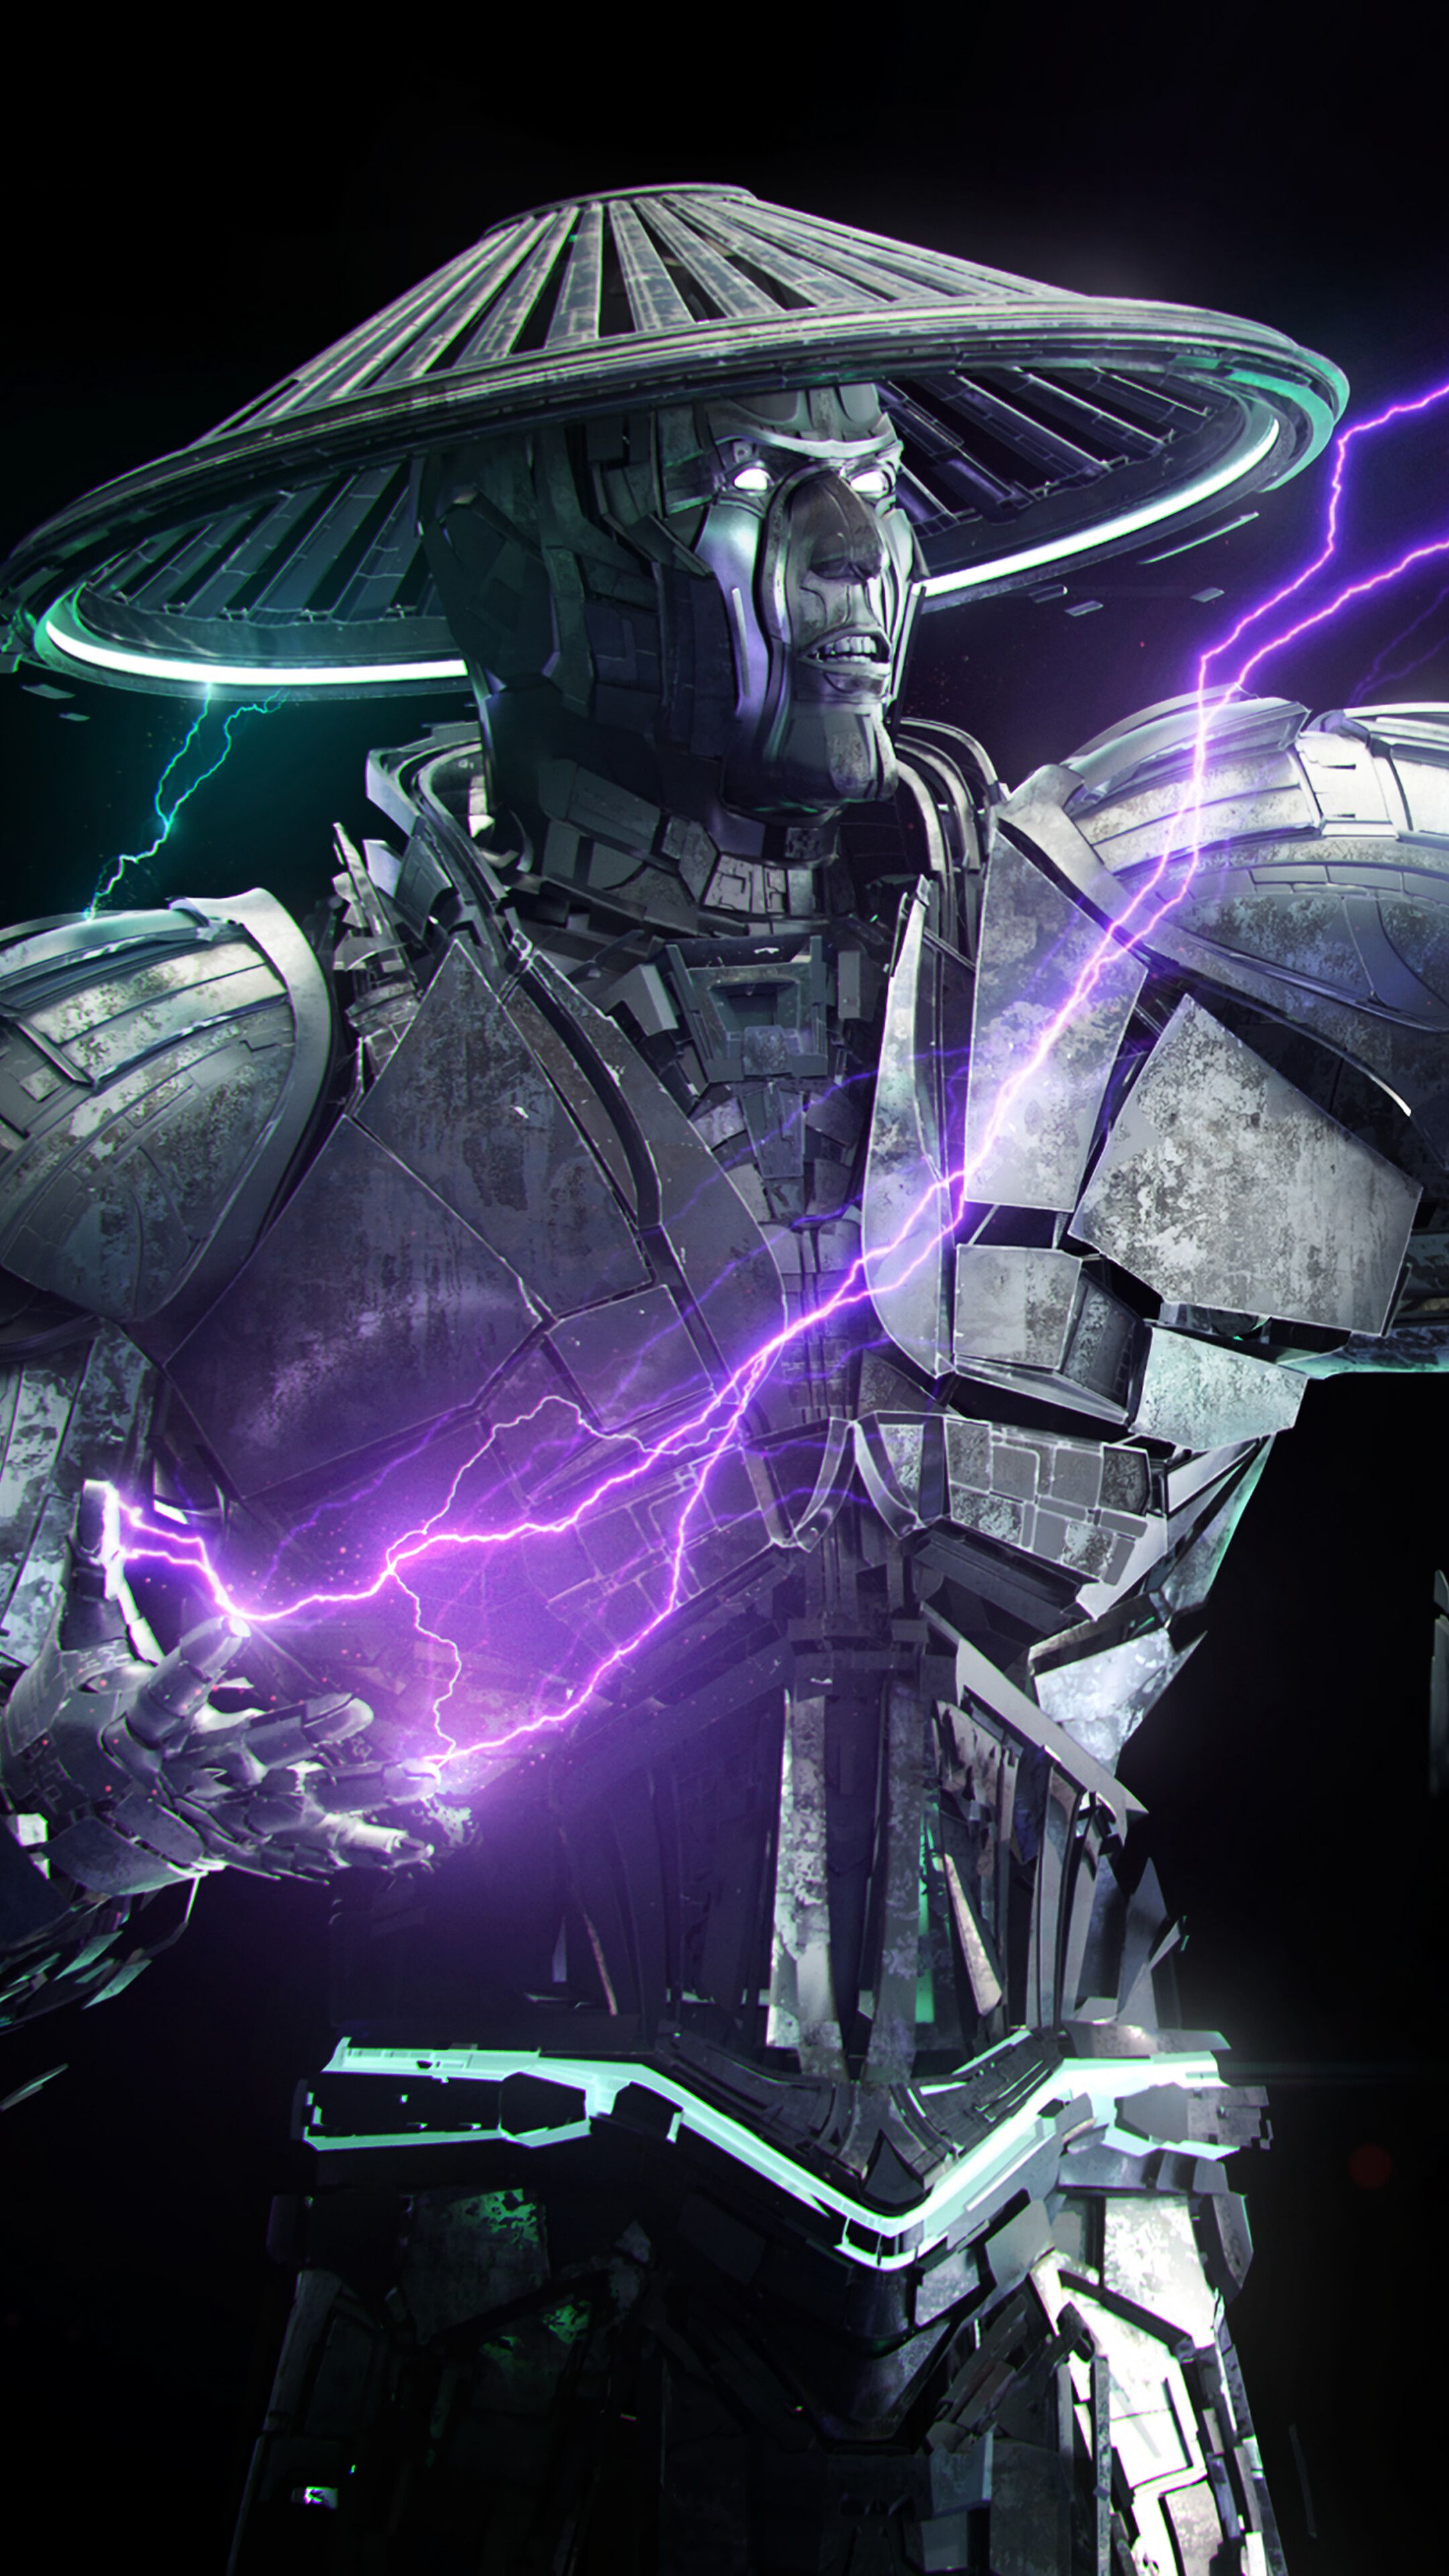 Raiden, Mortal Kombat, 4K phone HD Wallpaper, Image, Background, Photo and Picture